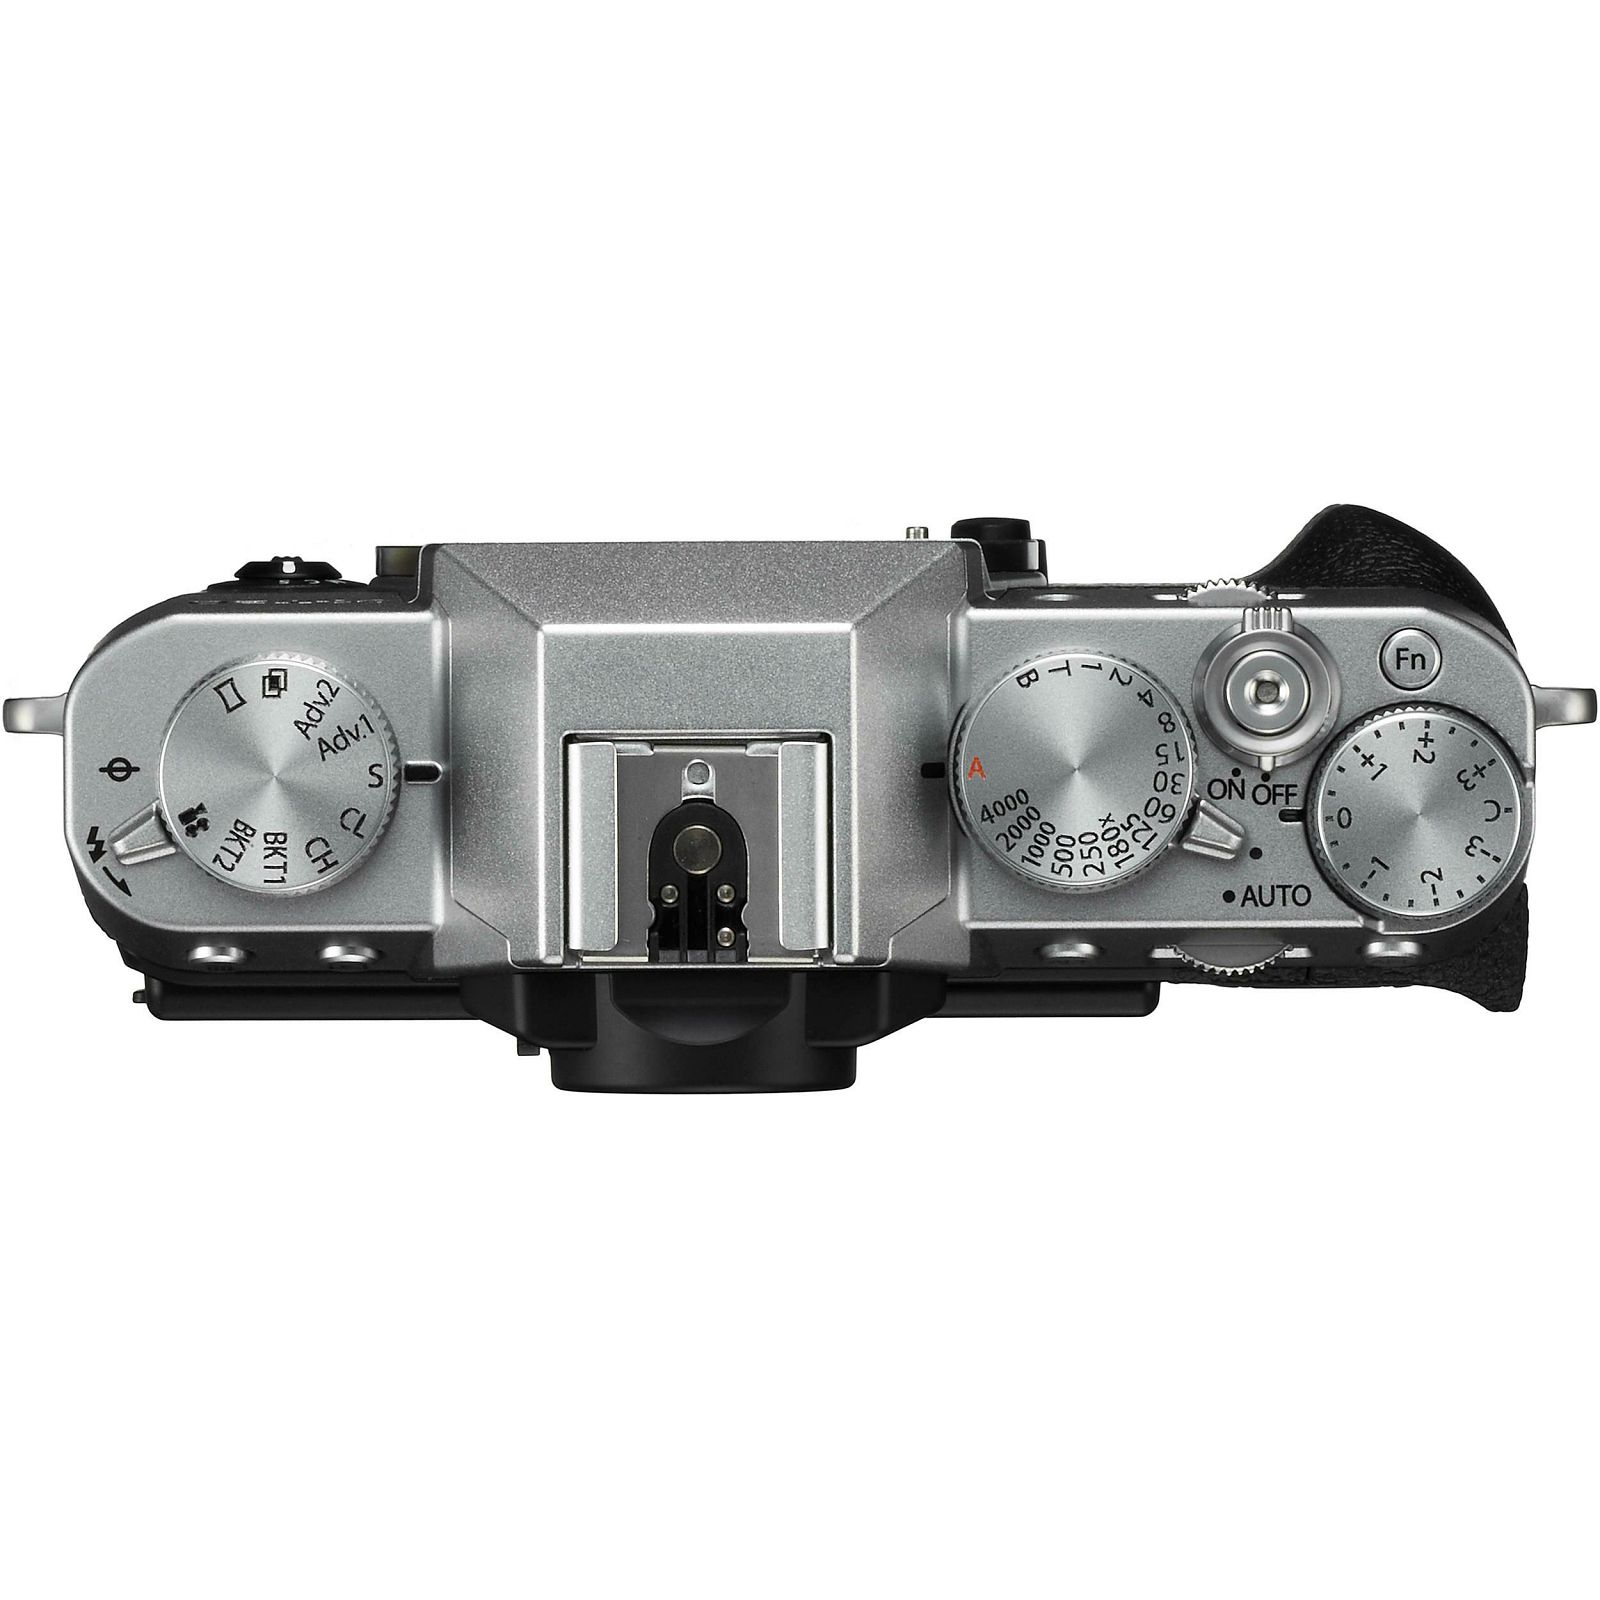 Fujifilm X-T20 Body Silver srebreni Digitalni fotoaparat Mirrorless camera Fuji Finepix